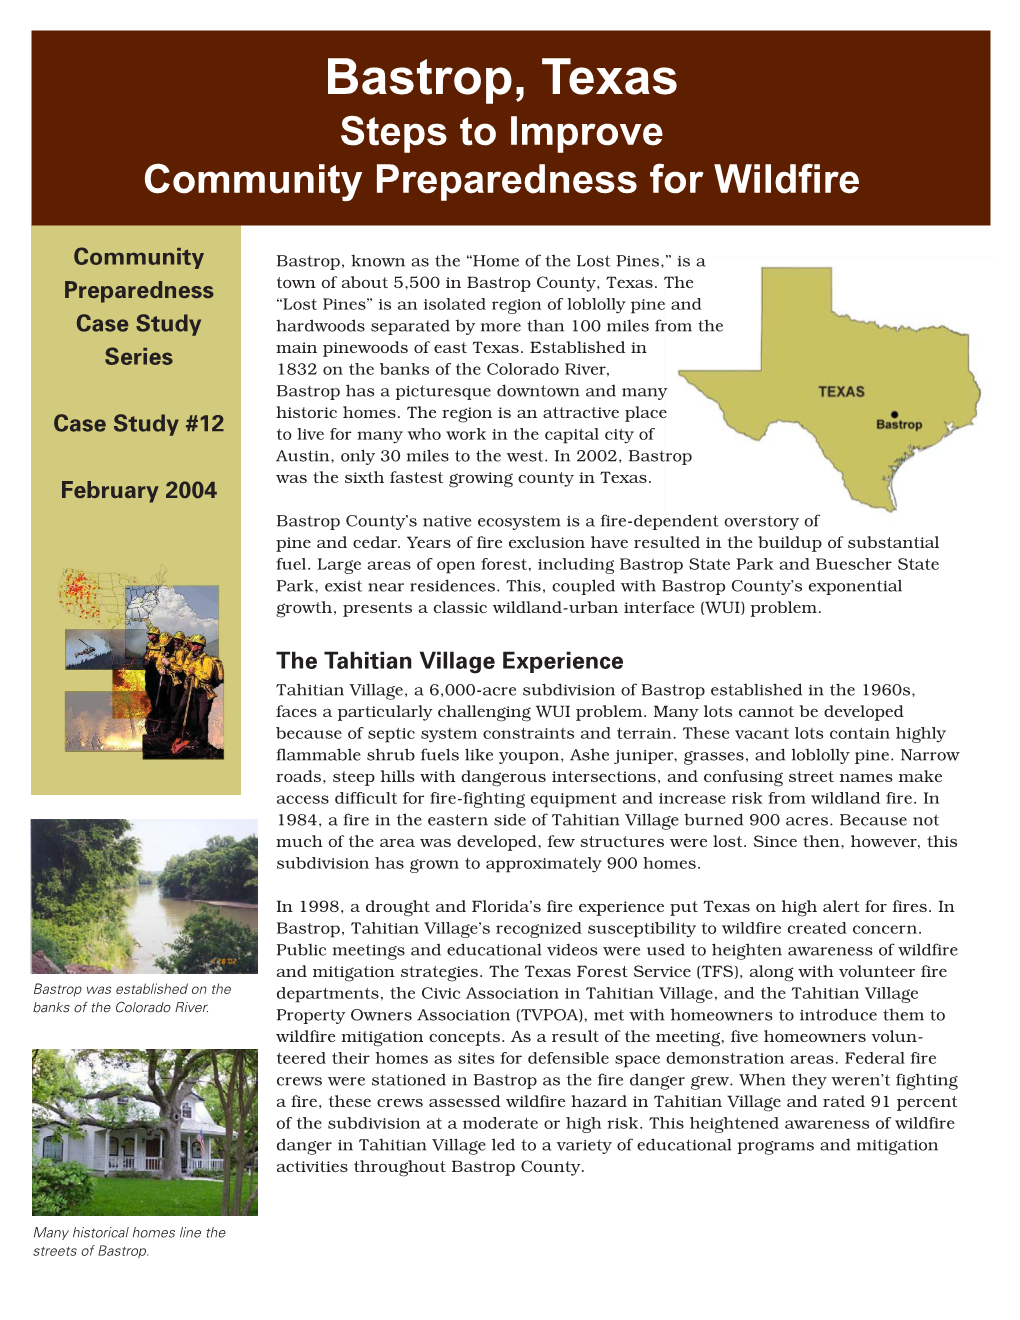 Bastrop, Texas Steps to Improve Community Preparedness for Wildfire